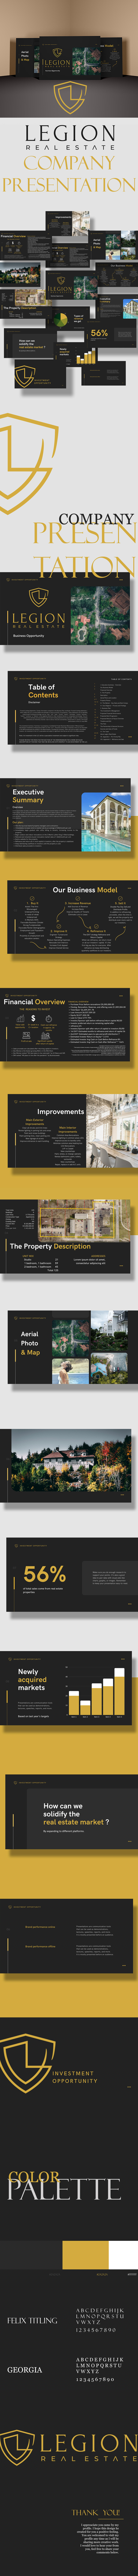 brochure design modern minimalist business company profile
